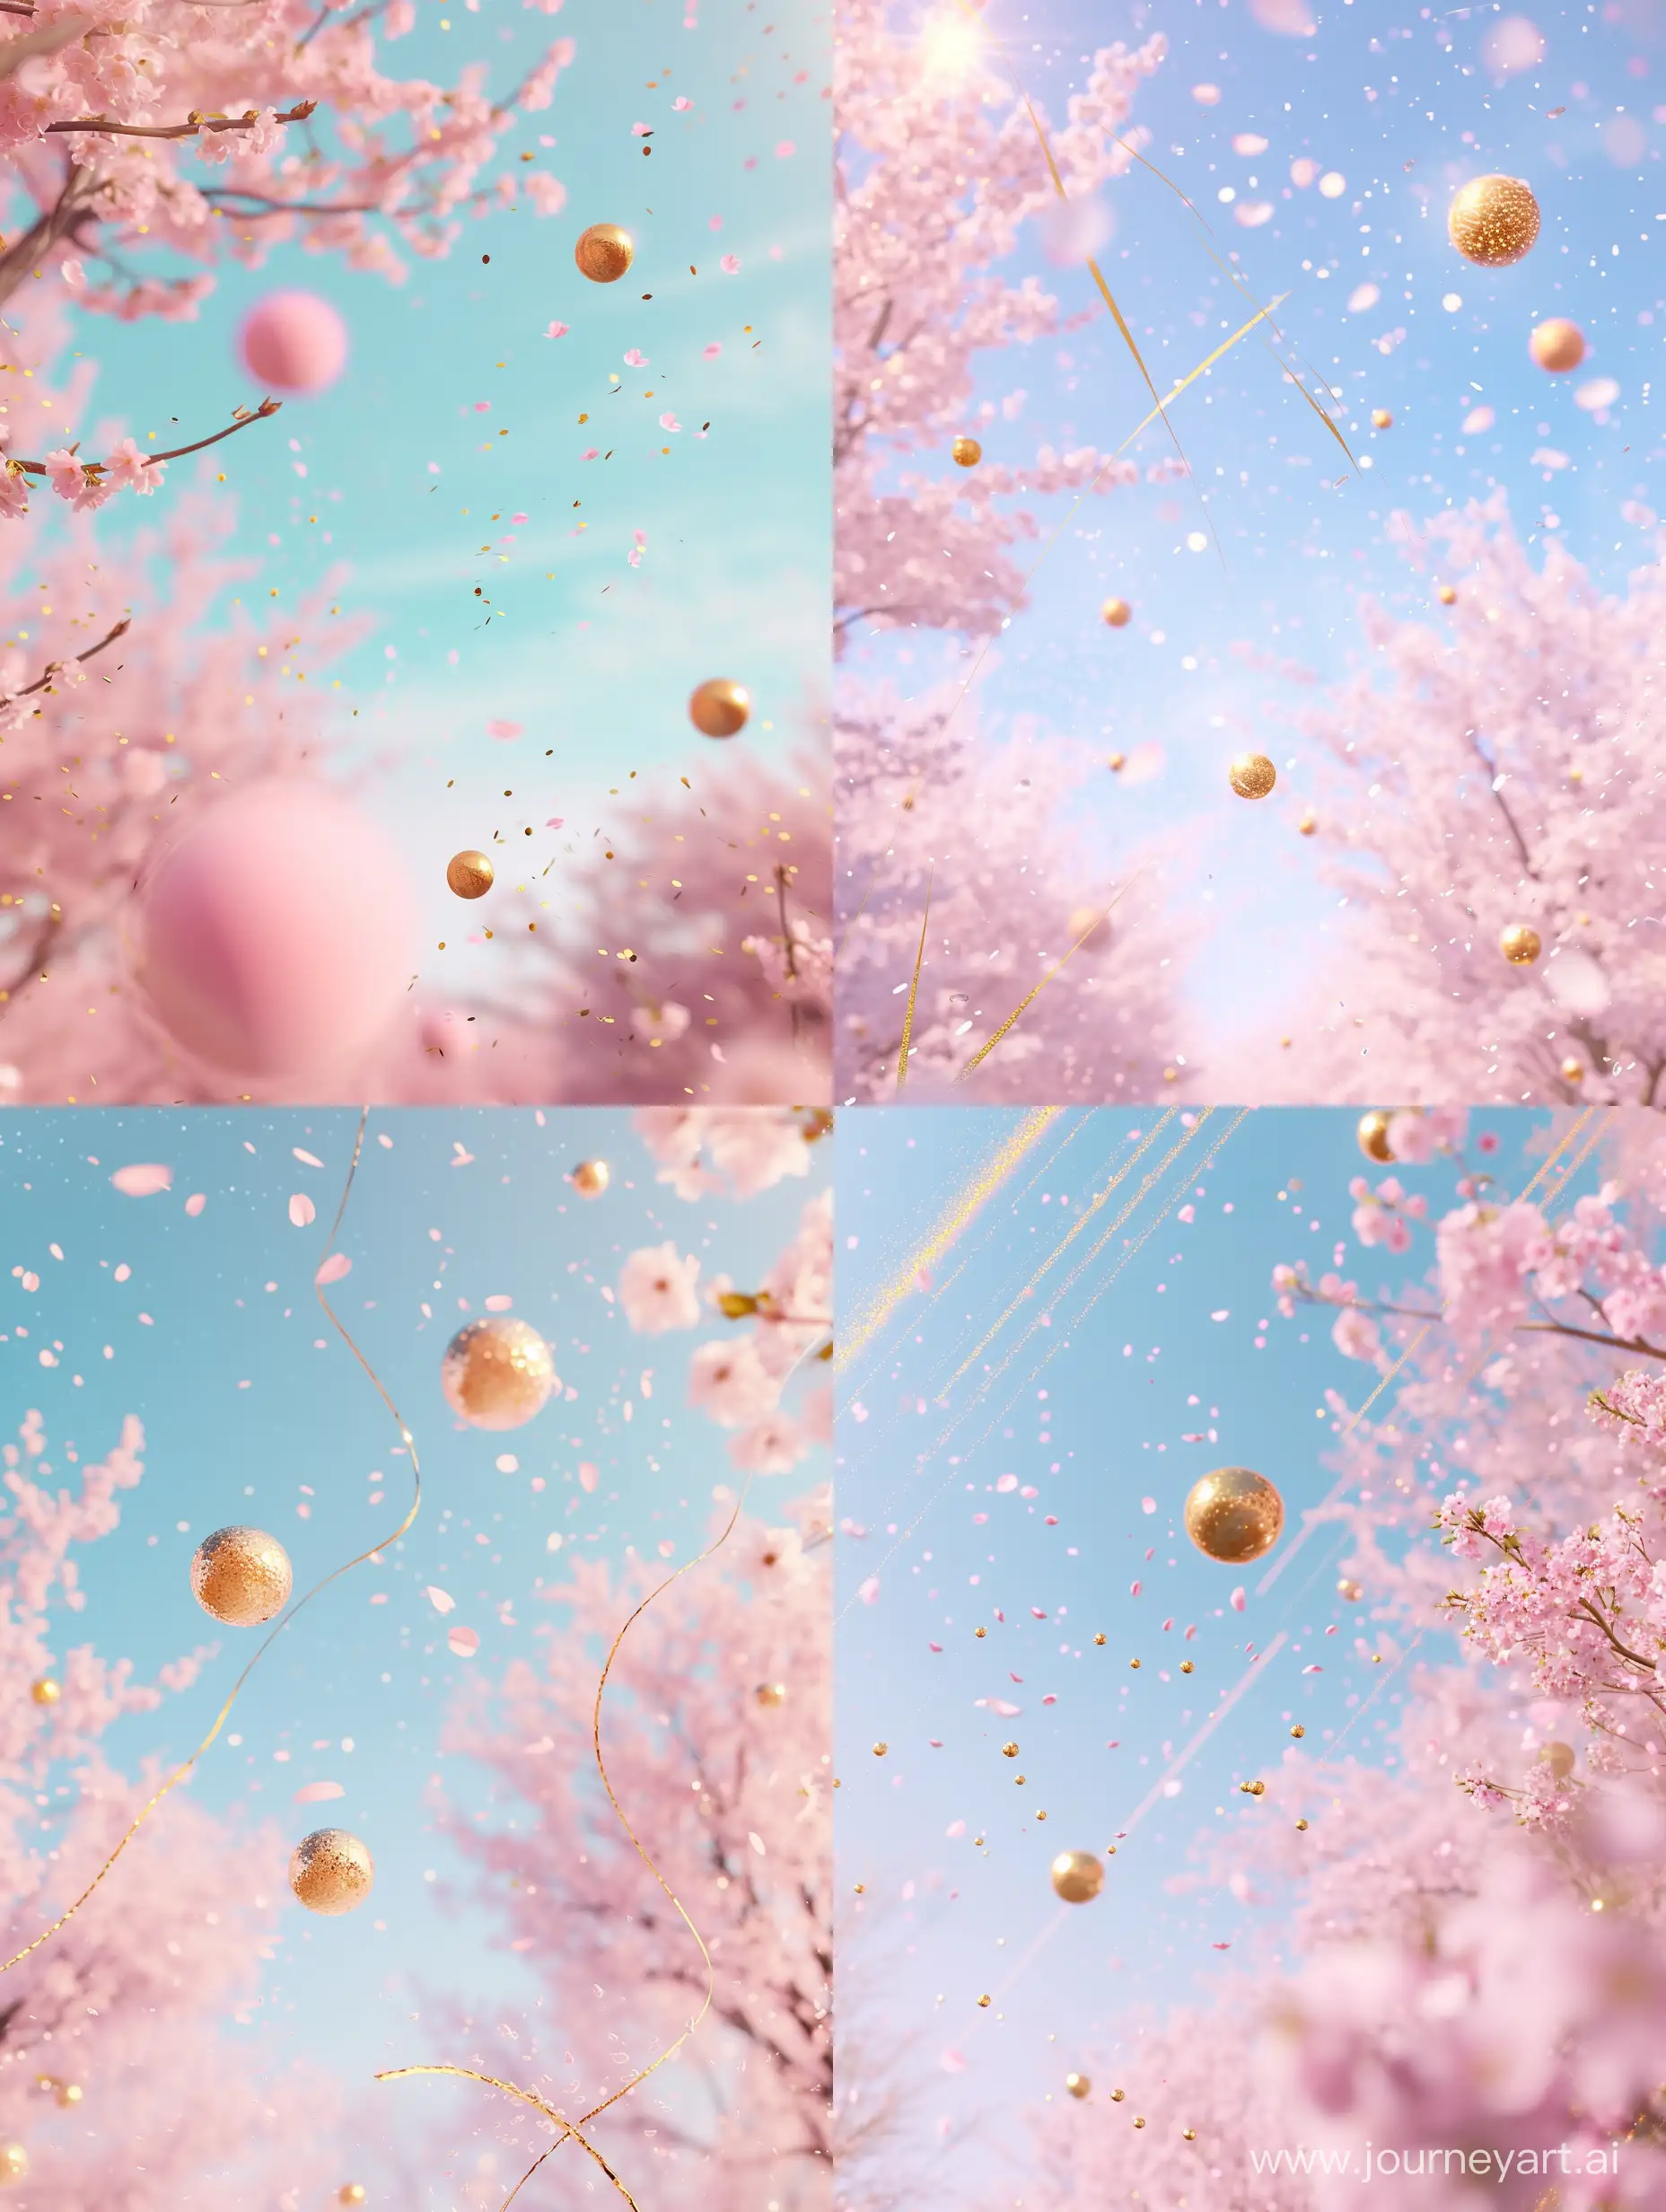 Enchanting-Sakura-Blossoms-in-a-Tender-Pink-Celestial-Space